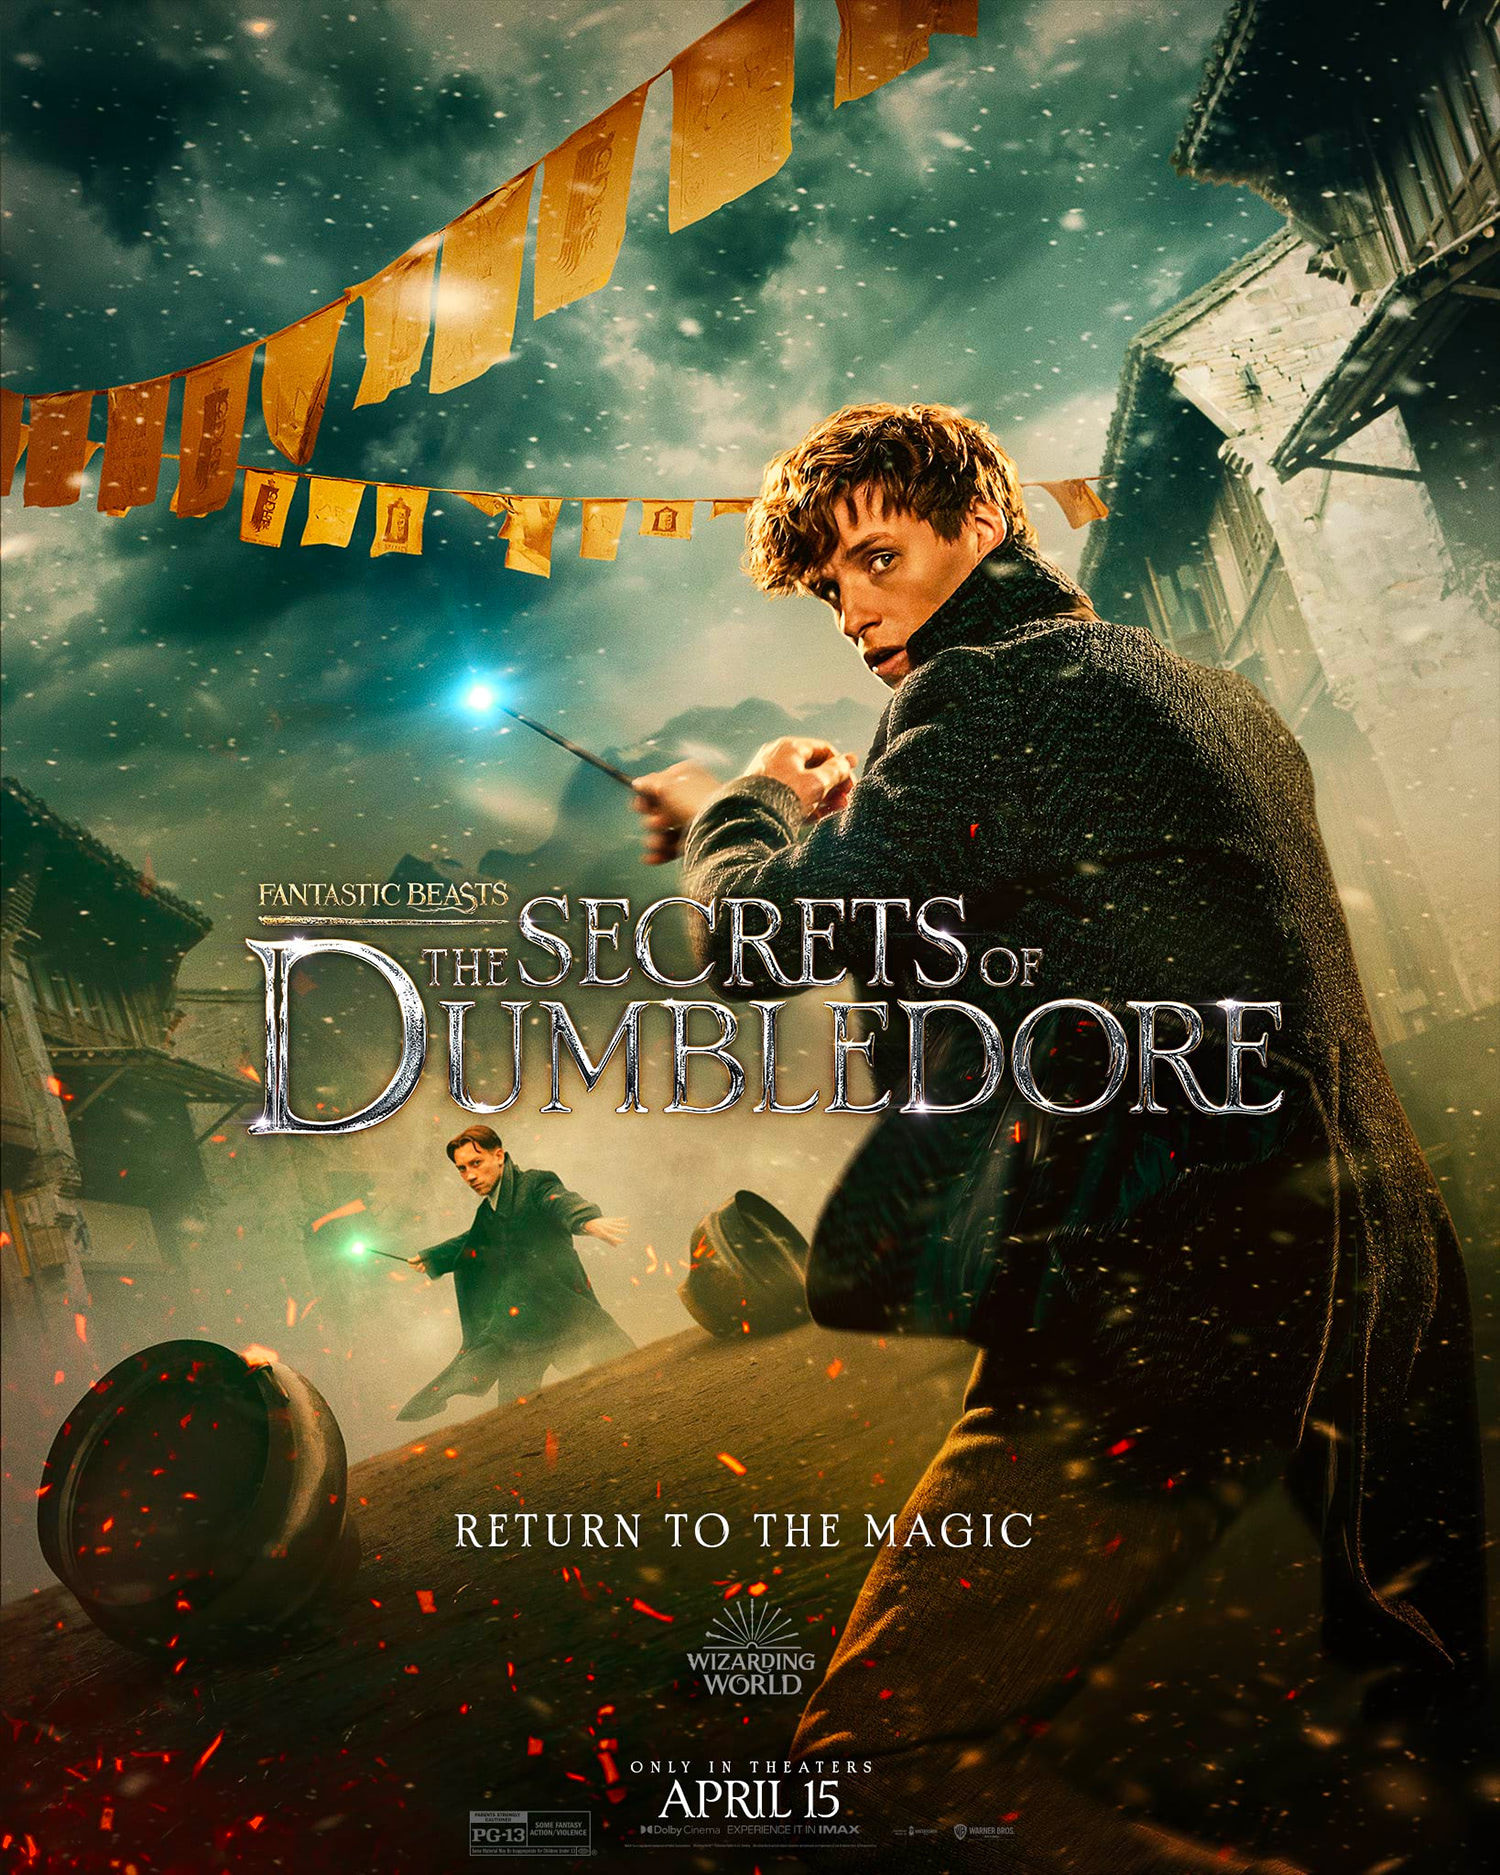 ‘Secrets of Dumbldore’ Newt Scamander poster